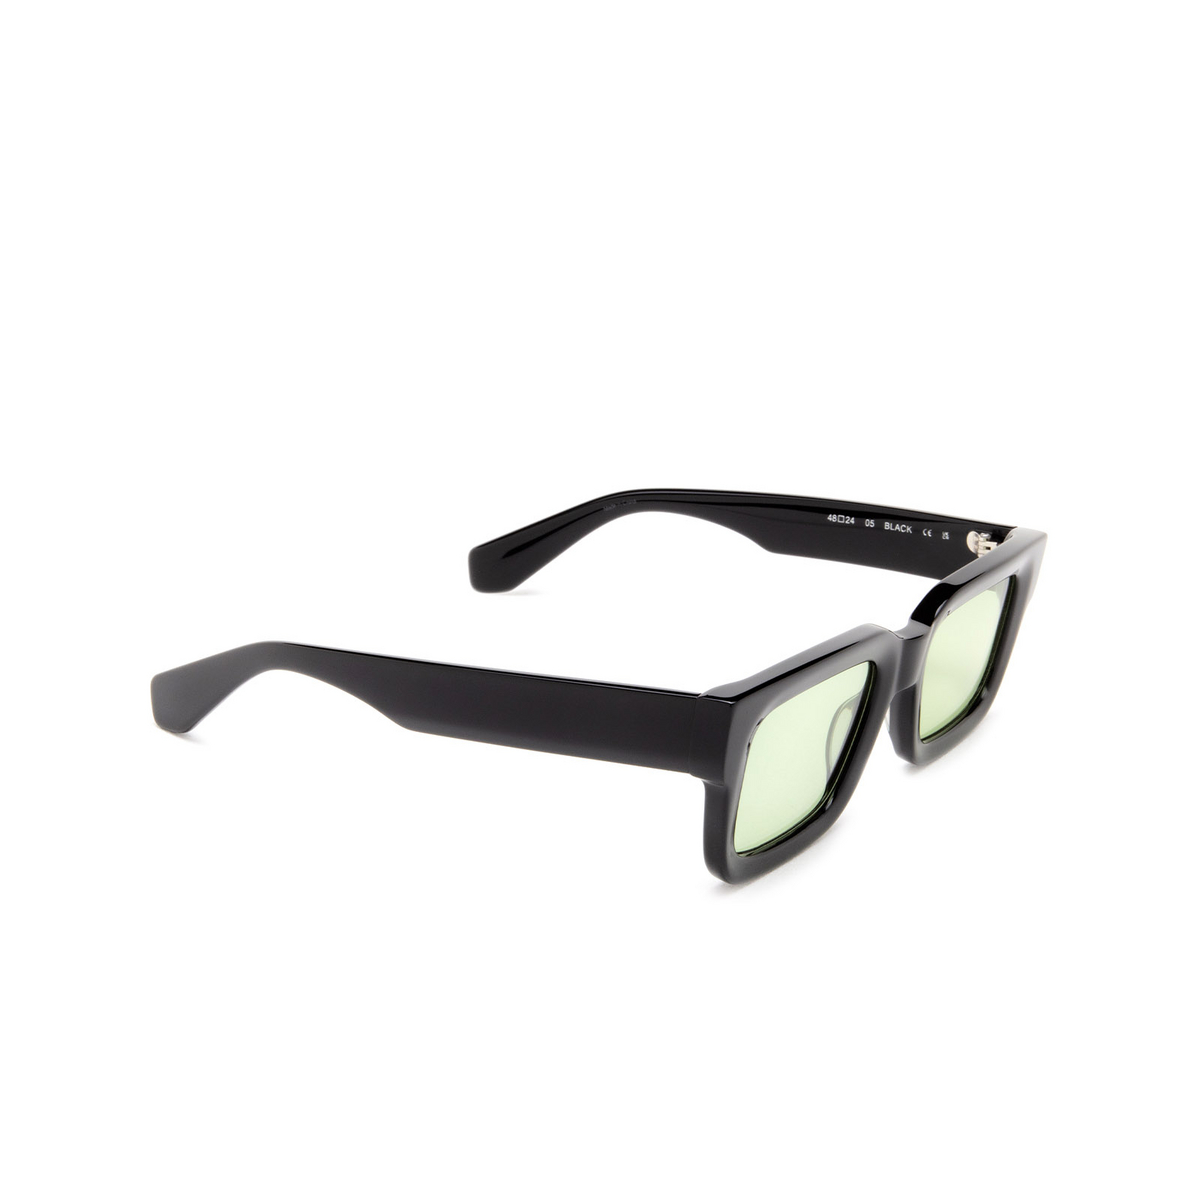 Chimi® Rectangle Sunglasses: 05 color Black Green - three-quarters view